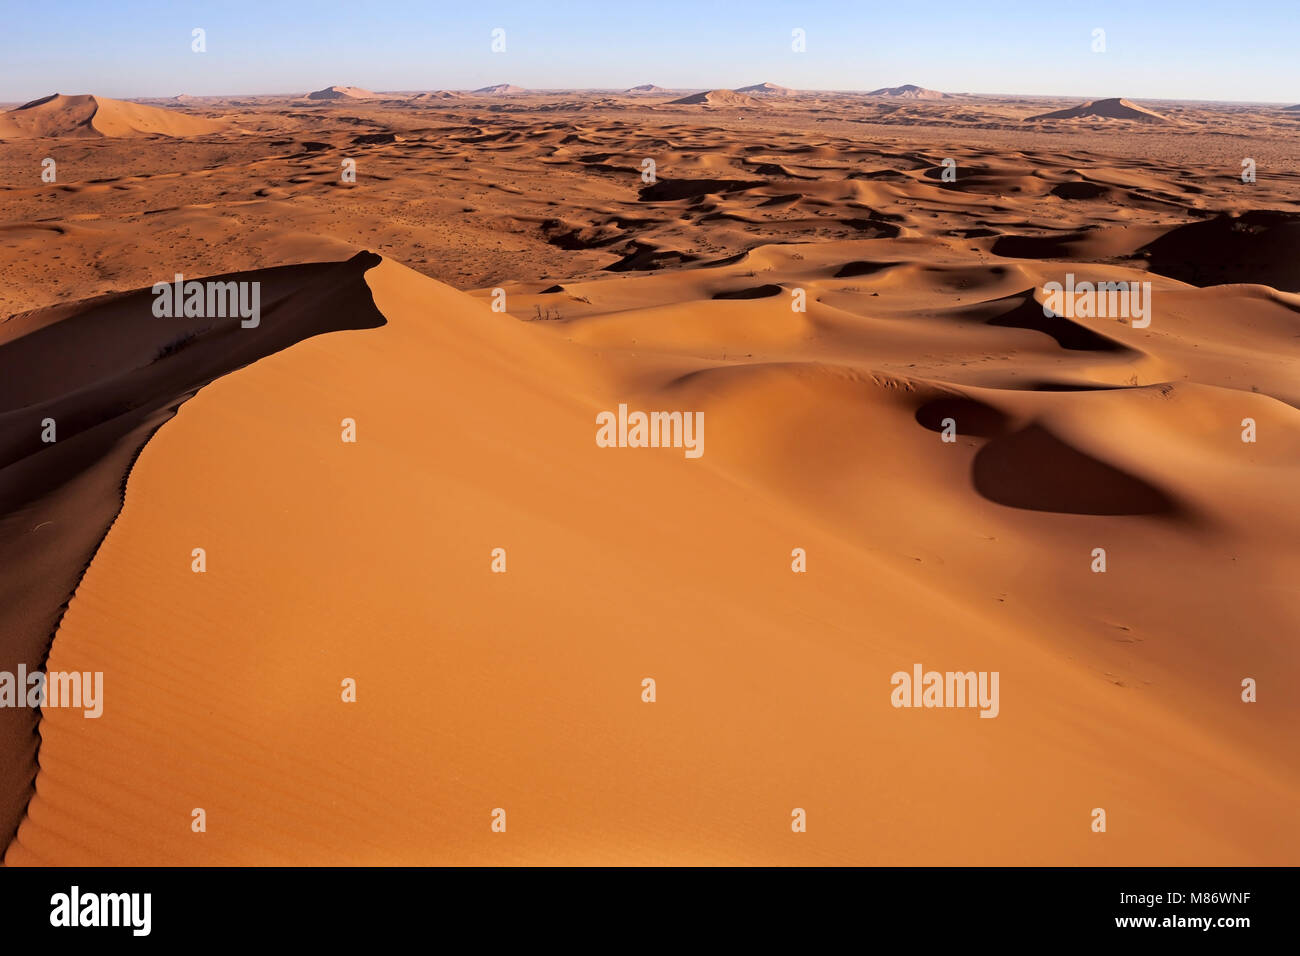 Aerial view of giant sand dunes, Riyadh, Saudi Arabia Stock Photo